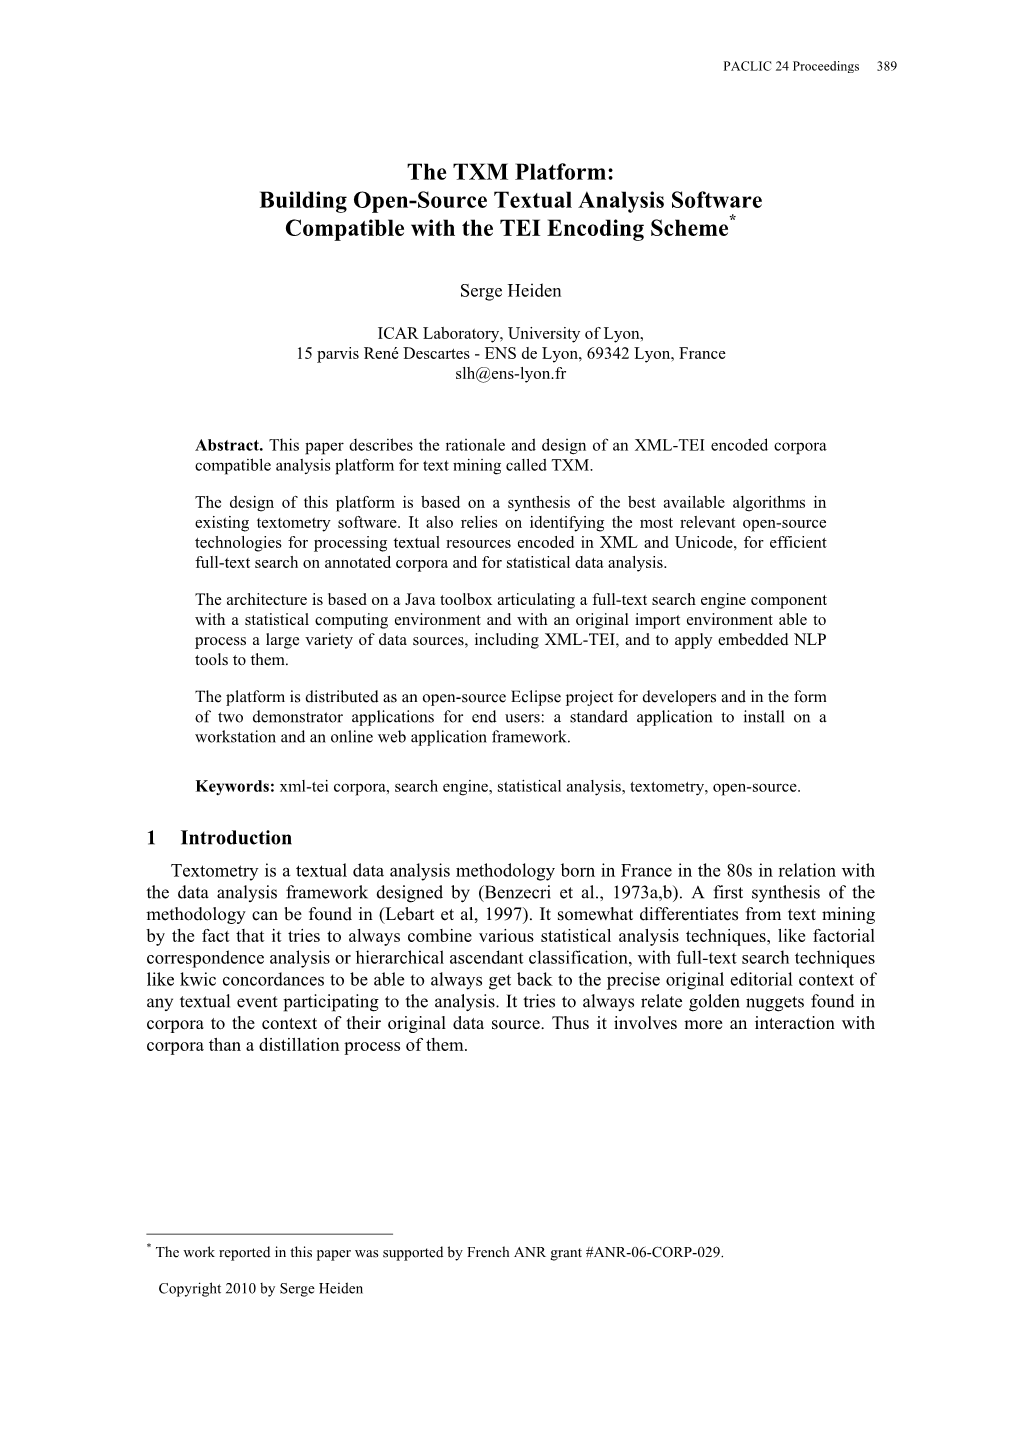 The TXM Platform: Building Open-Source Textual Analysis Software Compatible with the TEI Encoding Scheme*